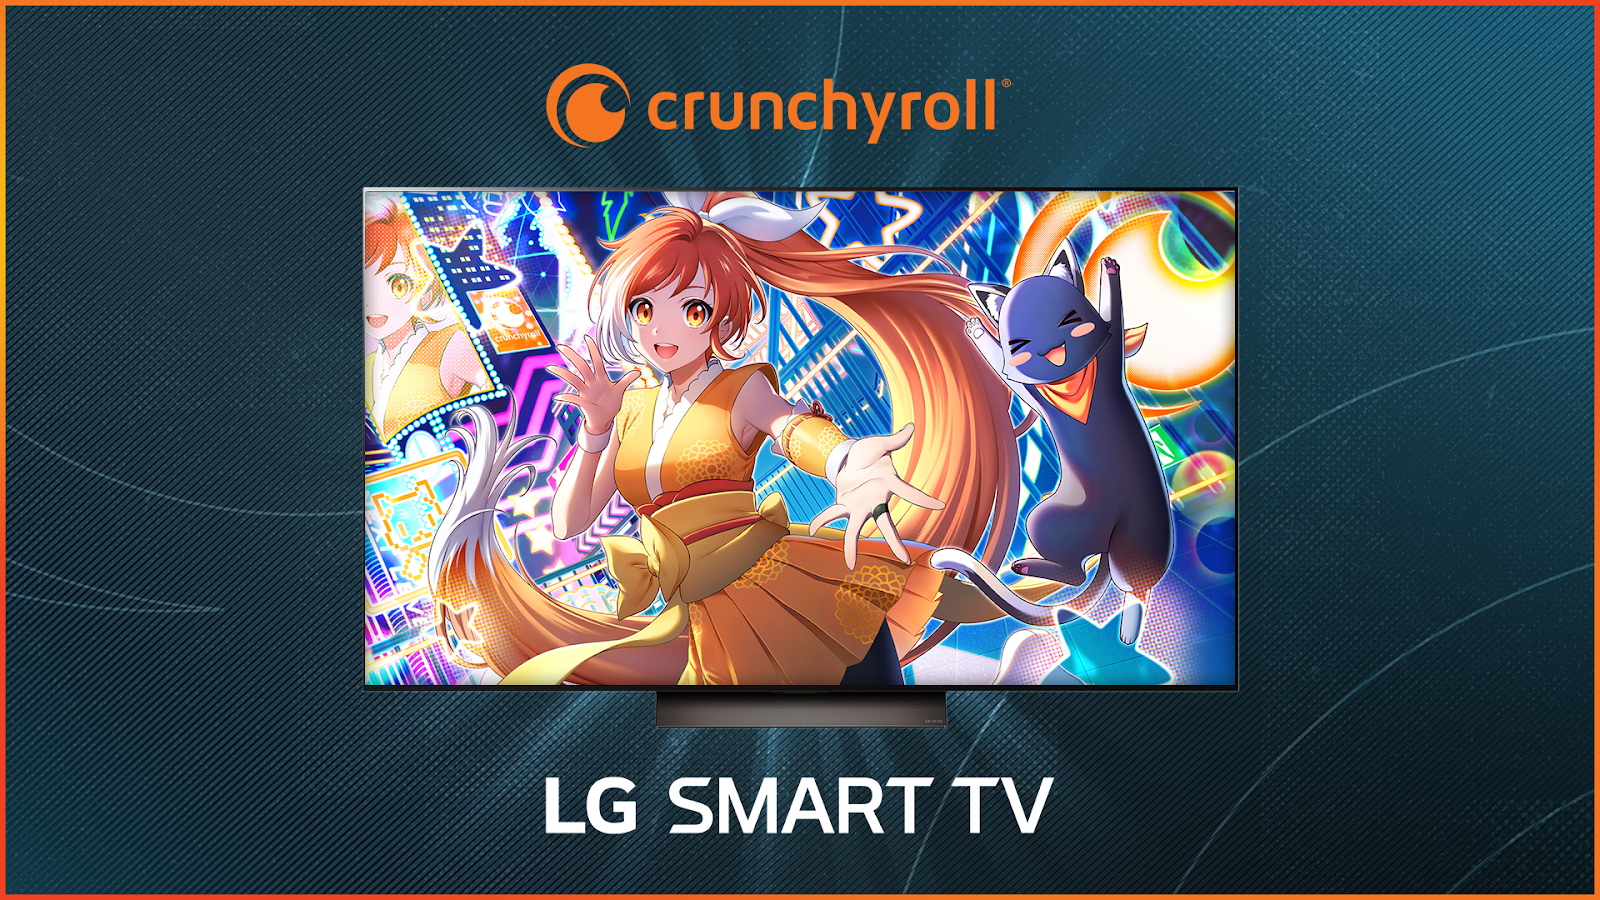 Crunchyroll The Global Anime Hub Launches Internationally On LG Smart TVs